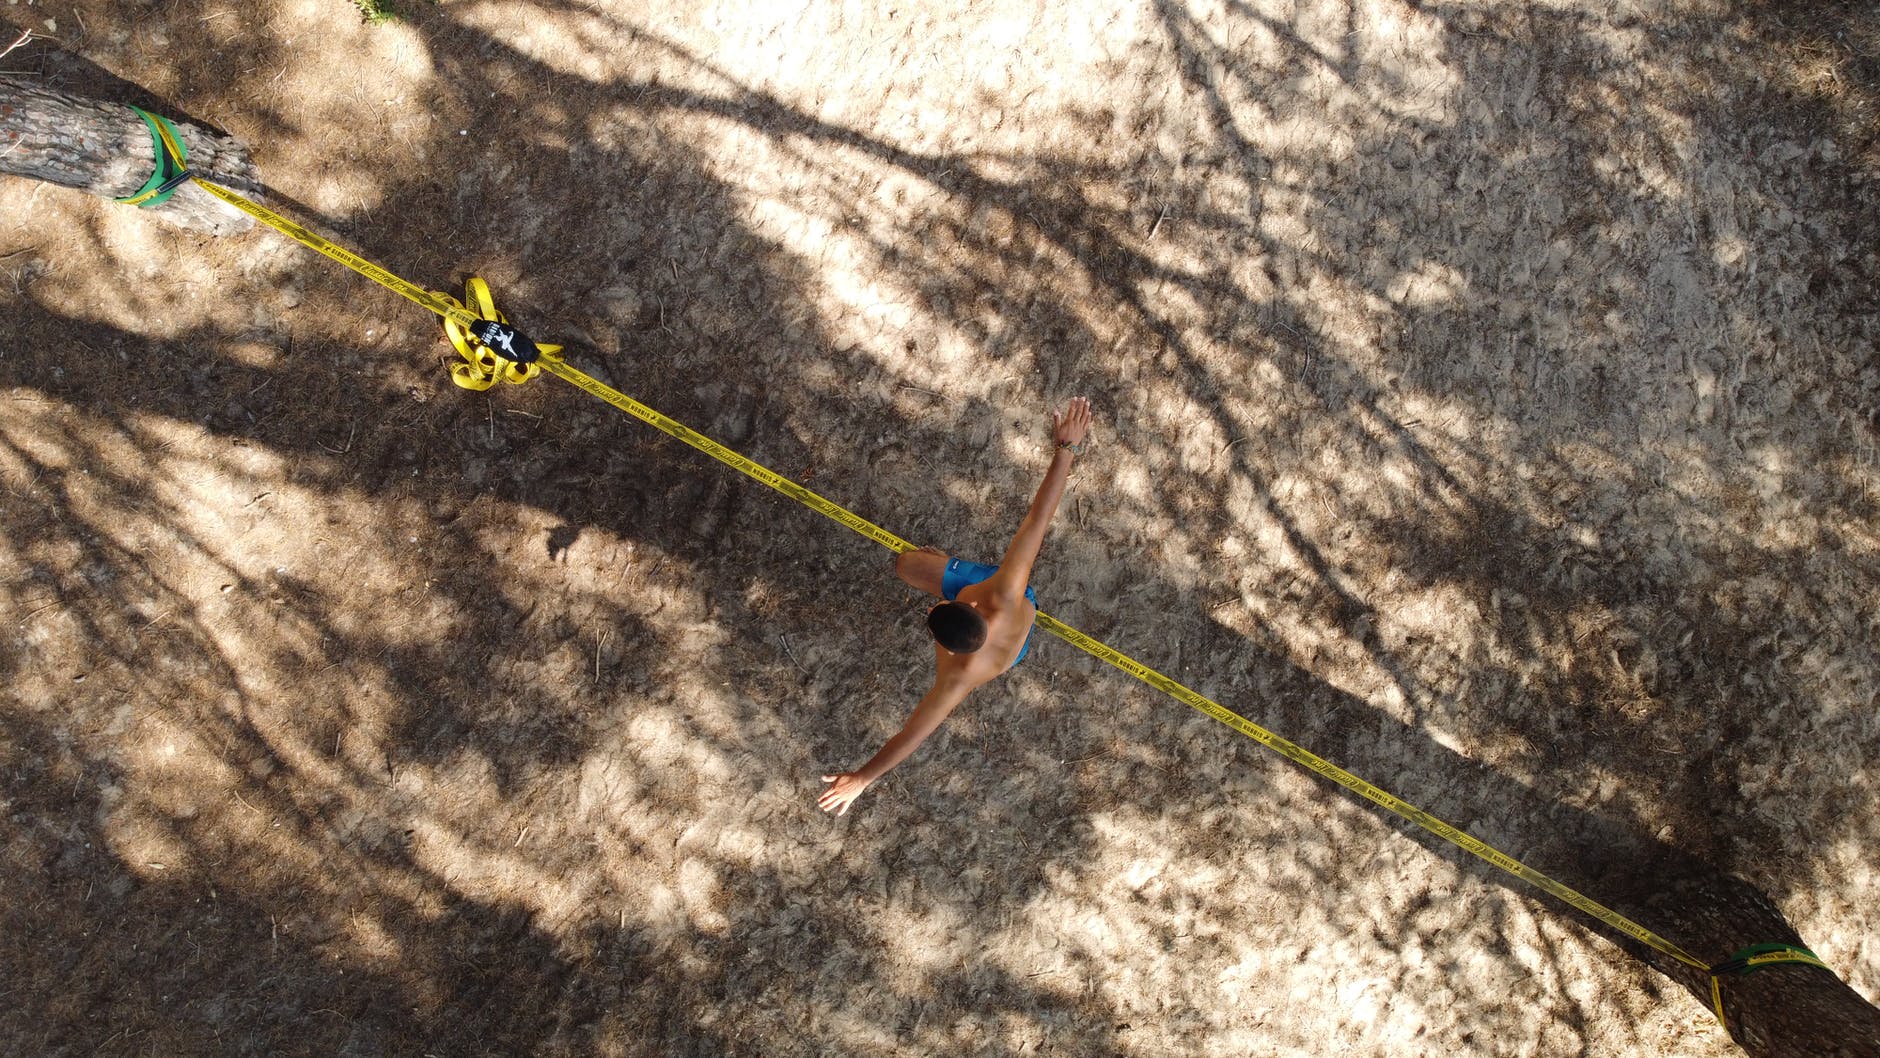 shirtless man waking on a yellow rope